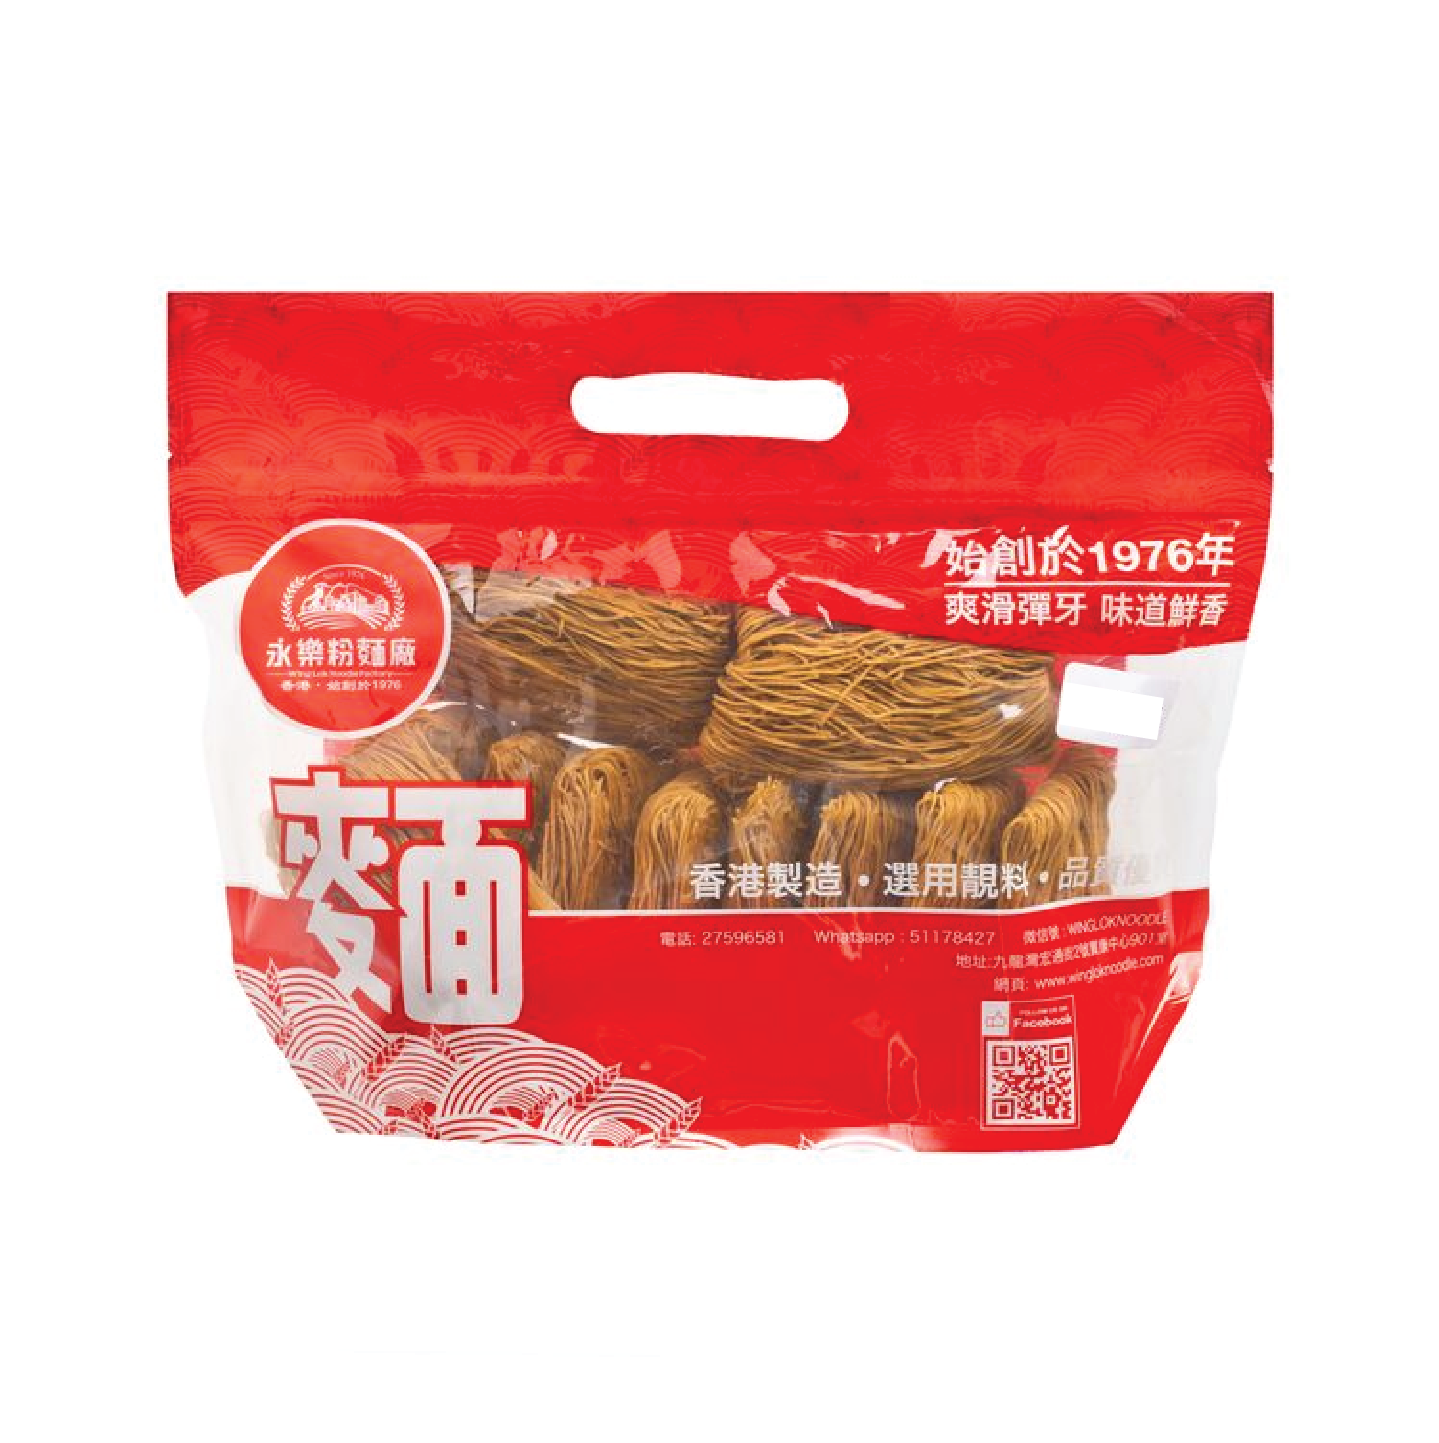 WING LOK NOODLES Supreme Scallop Noodles (12PCS) 永樂粉麵廠 極上瑤柱麵(12個裝)